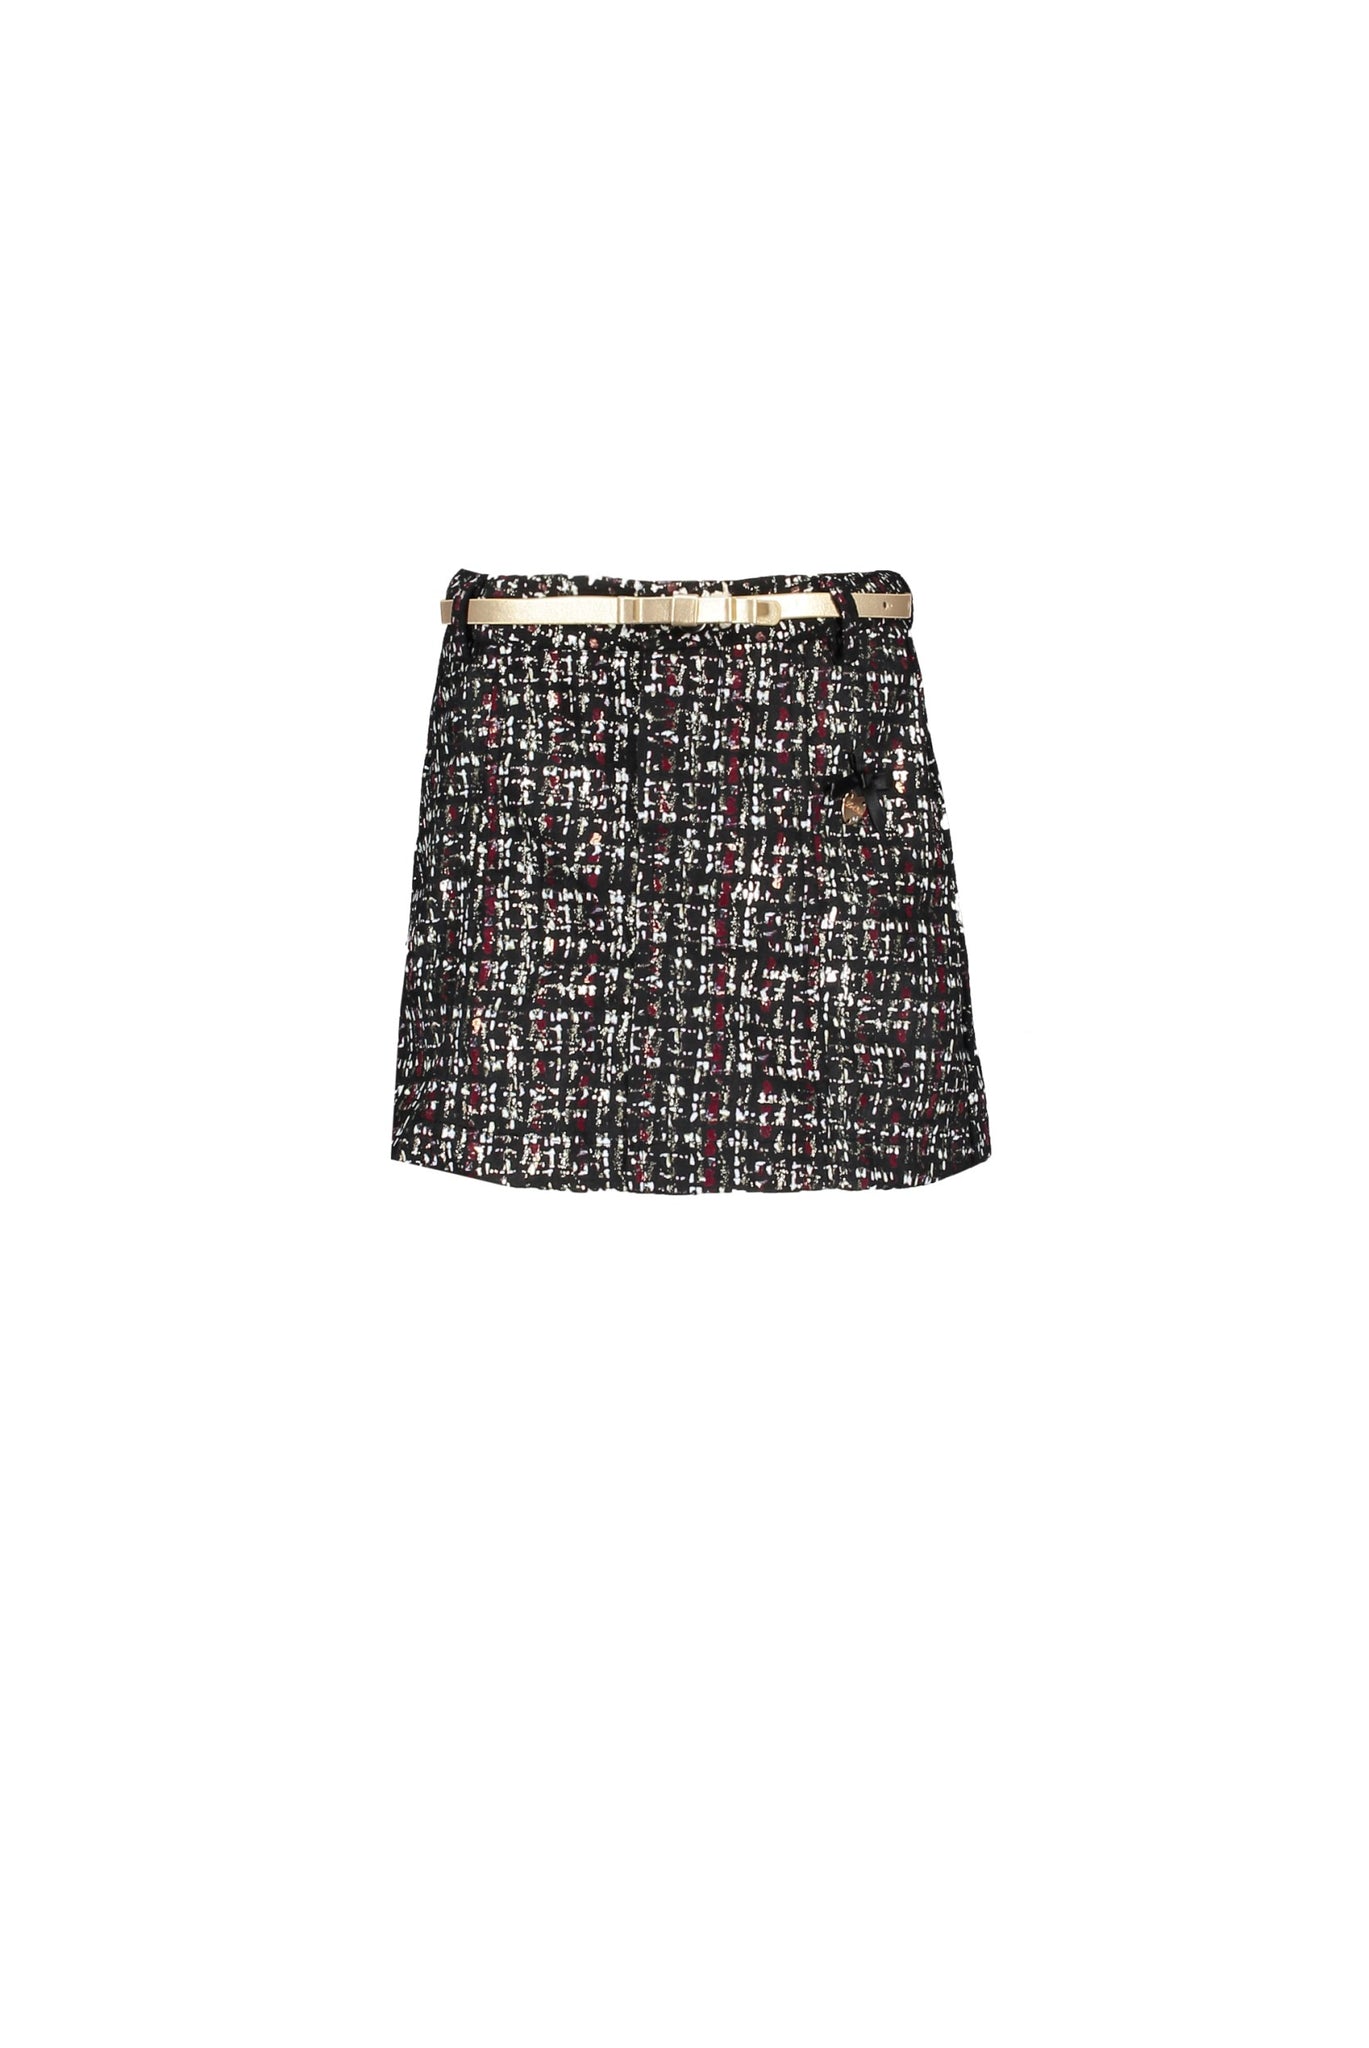 LE CHIC Tweed Skirt